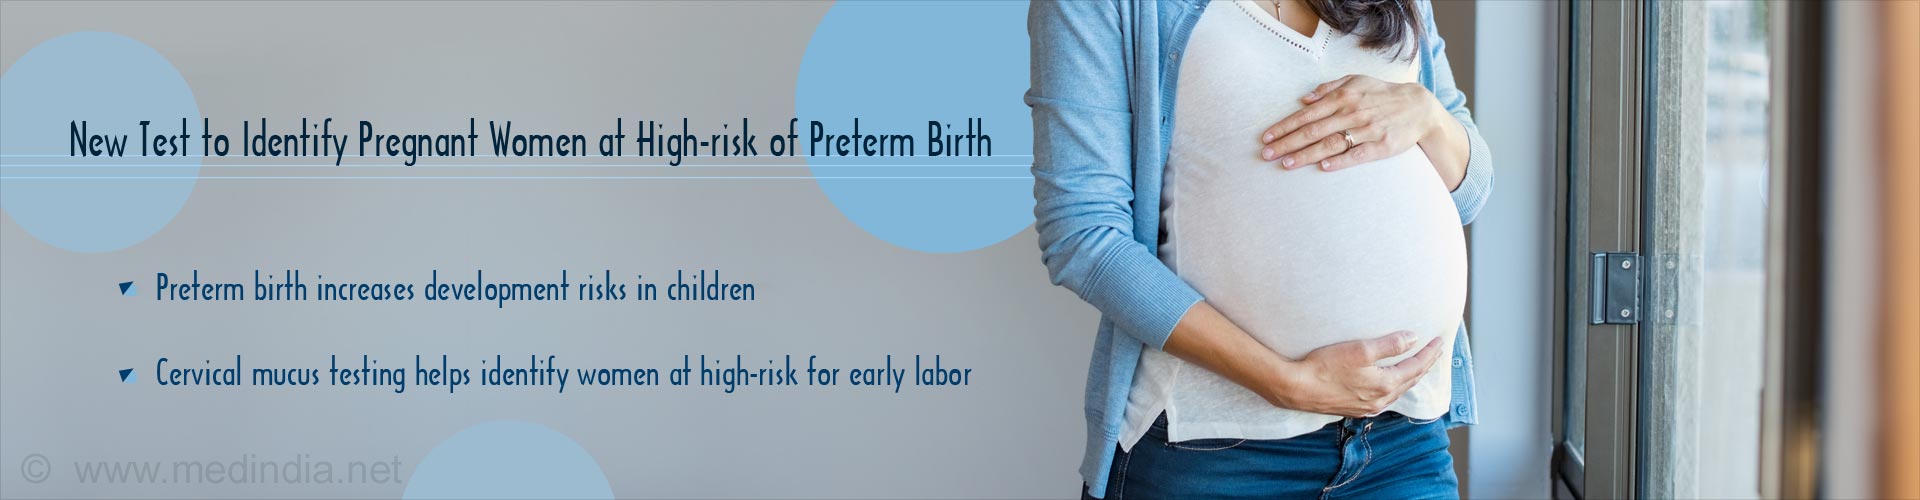 New test to identify pregnant women at high-risk of preterm birth
- preterm birth increases development risks in children
- cervical mucus testing helps identify women at high-risk for early labor